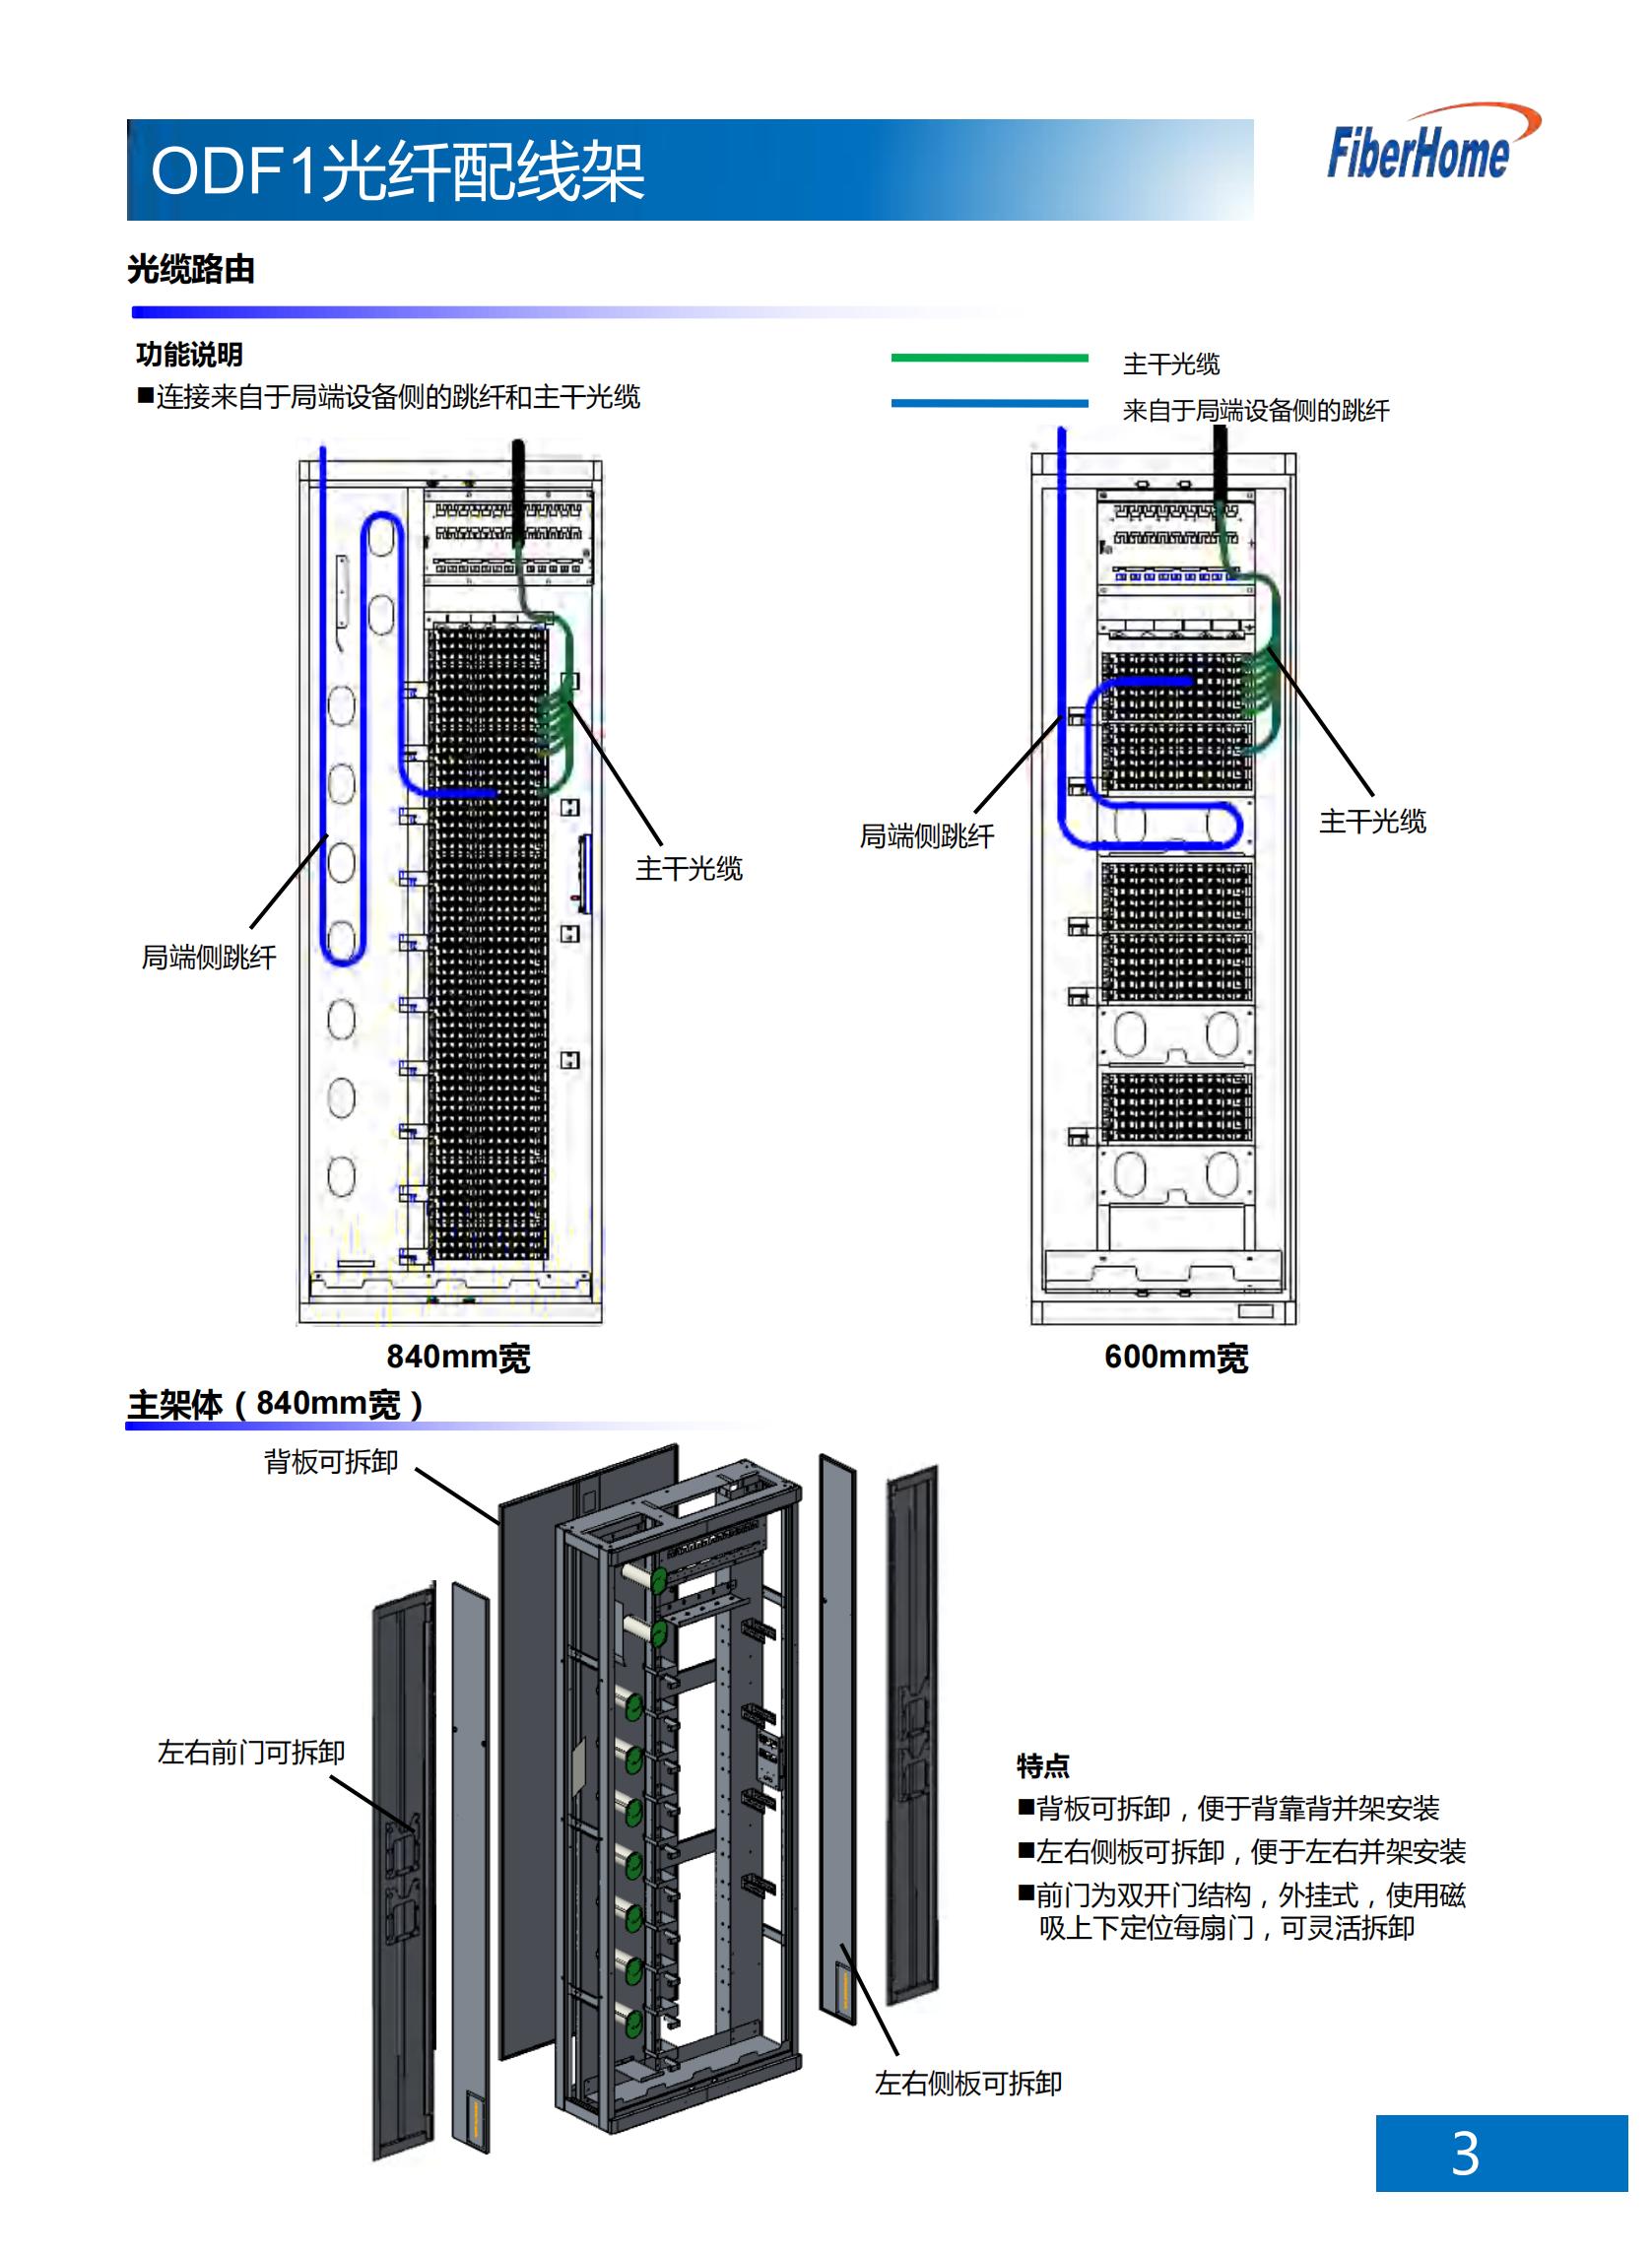 ODF101-144-A7-SC ODF optical fiber distribution frame (144-core wall-mounted all include 12-core SC fusion integration unit)